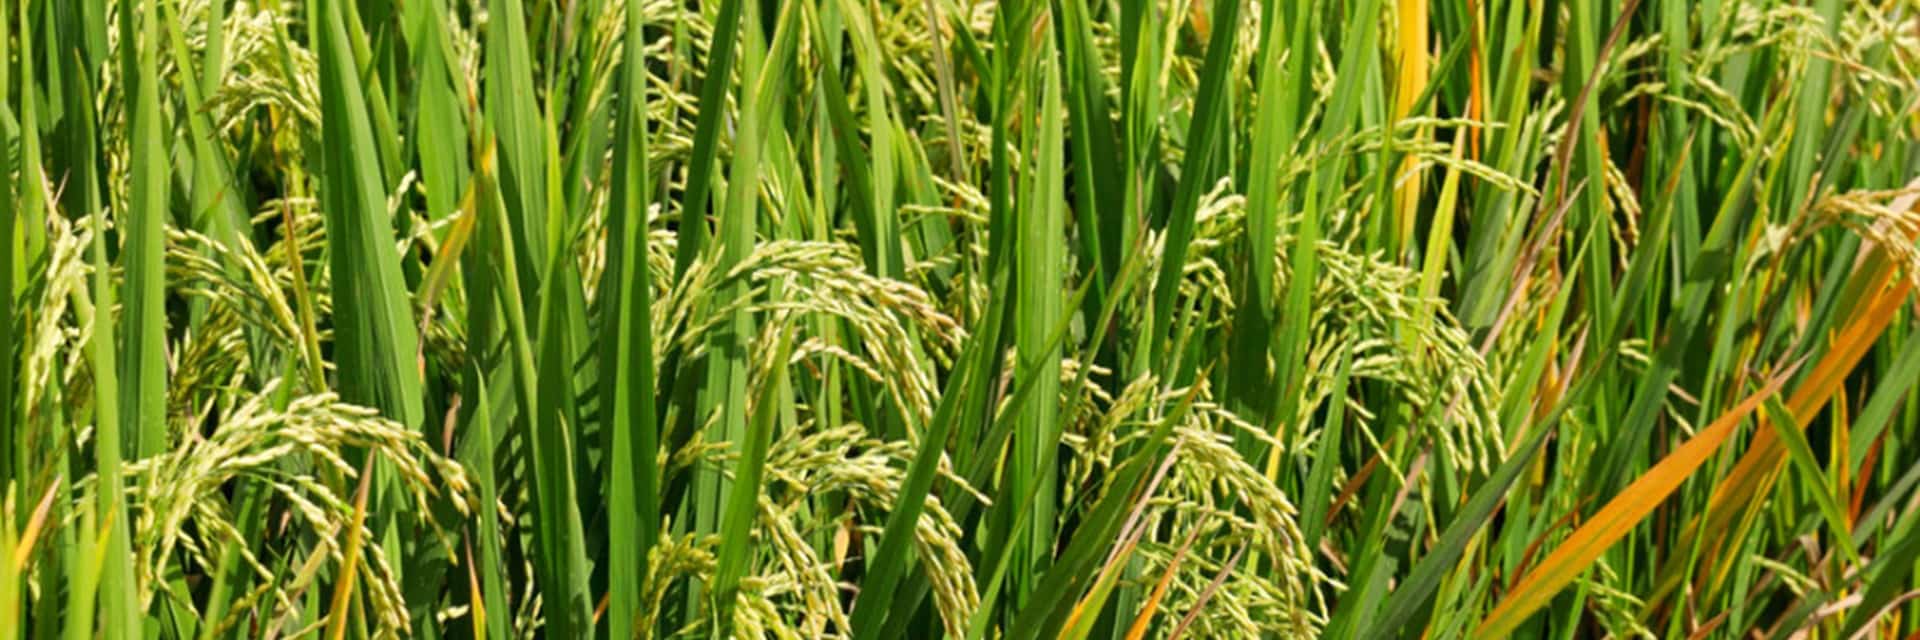 https://chcnav.com/uploads/rice-planting-precision-agriculture-chc-navigation.jpg